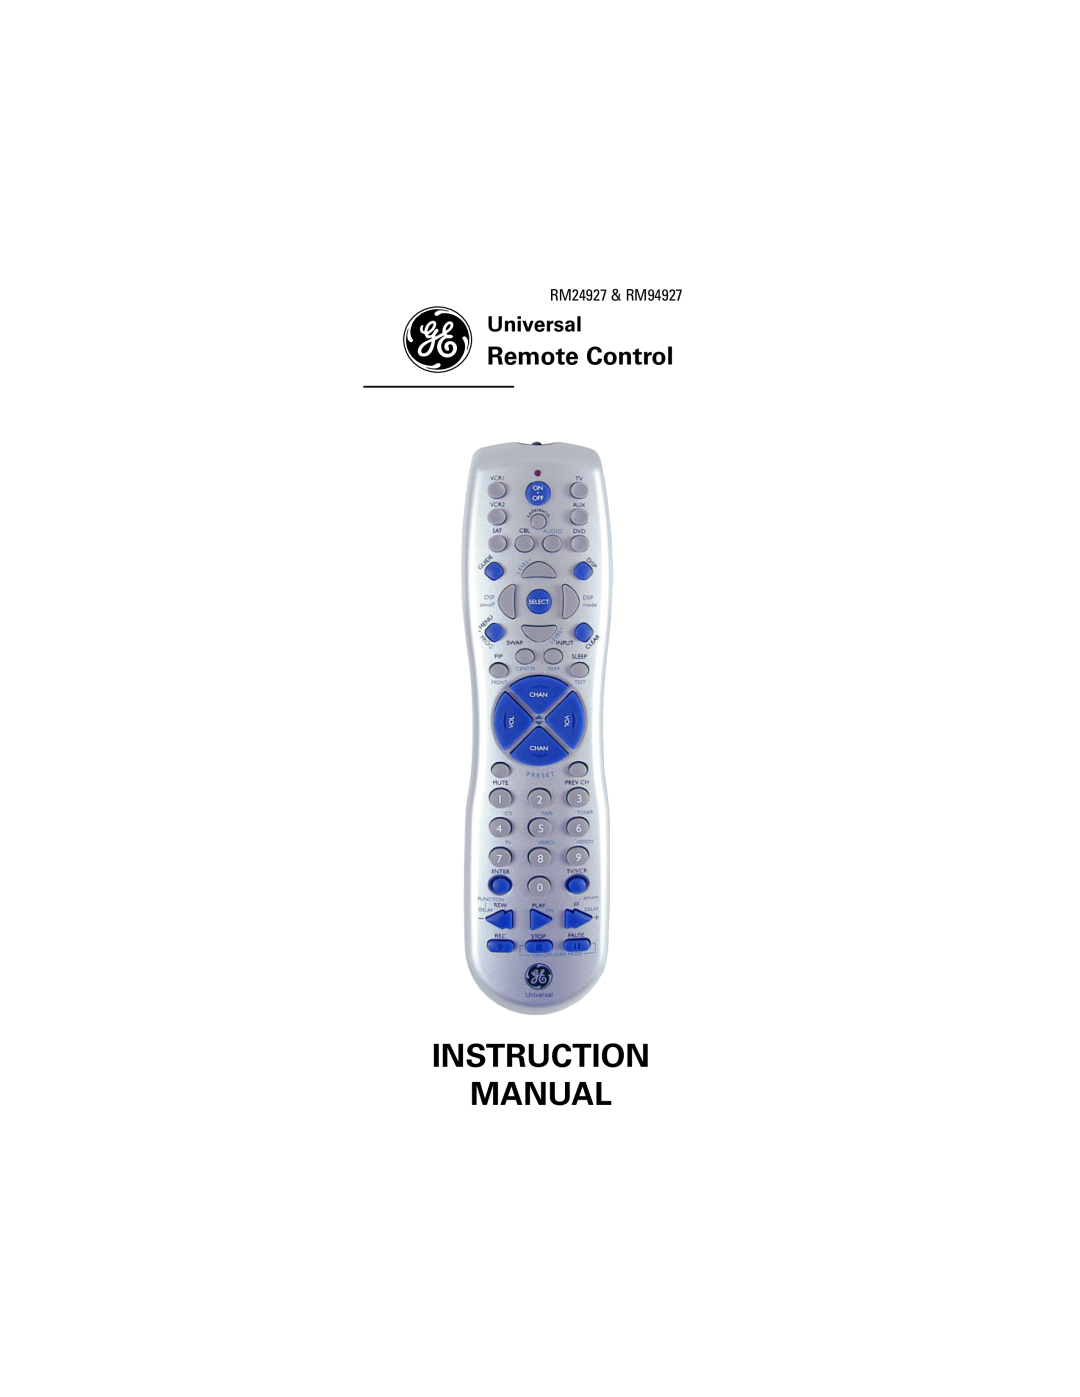 Jasco instruction manual Instruction Manual, Remote Control, Universal, RM24927 & RM94927 